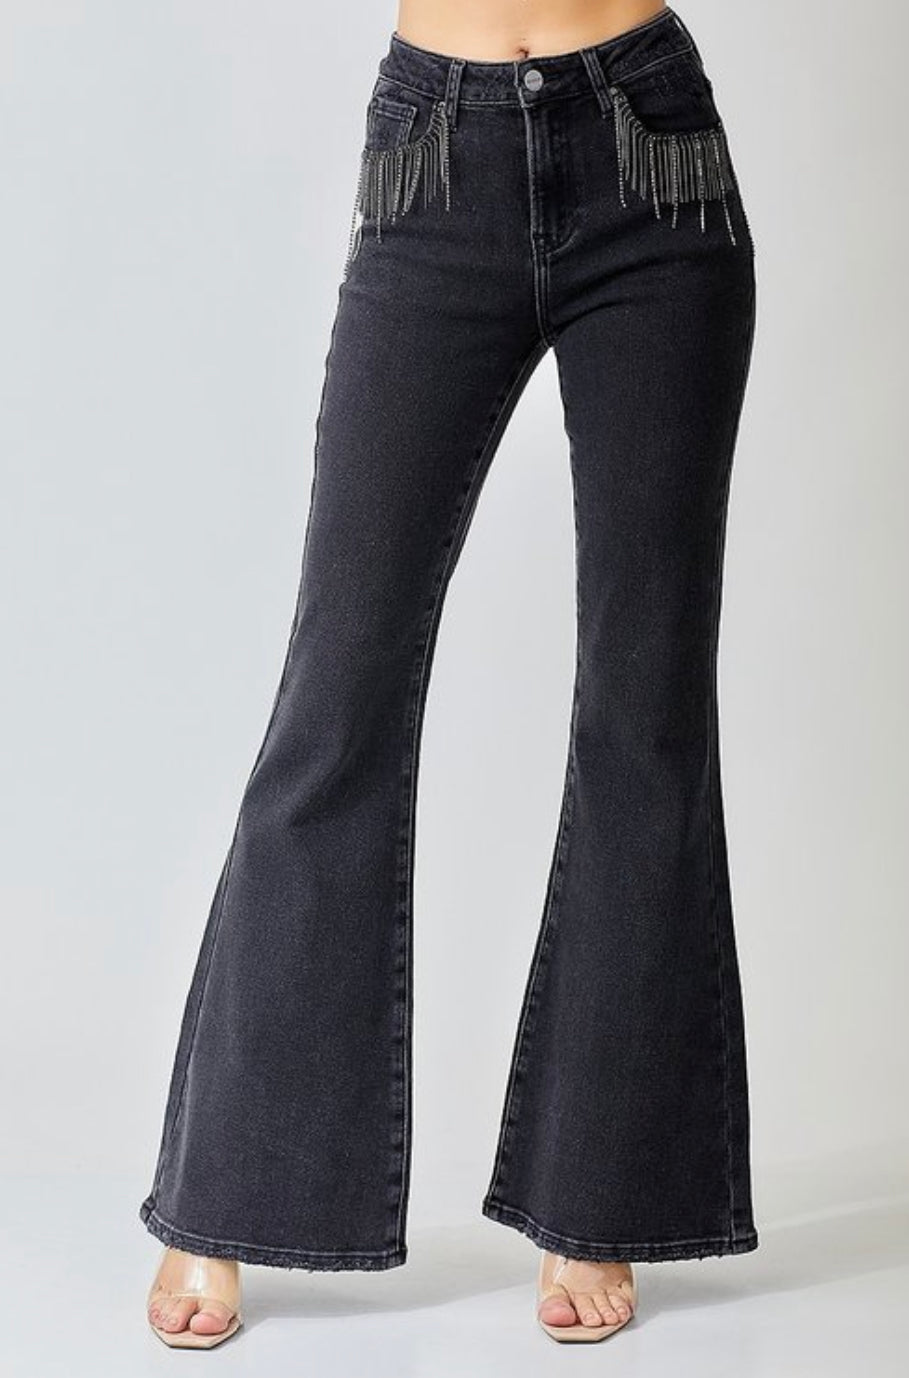 Risen Dolly Black High-Rise Embellished Flare Jeans – Osage Chic